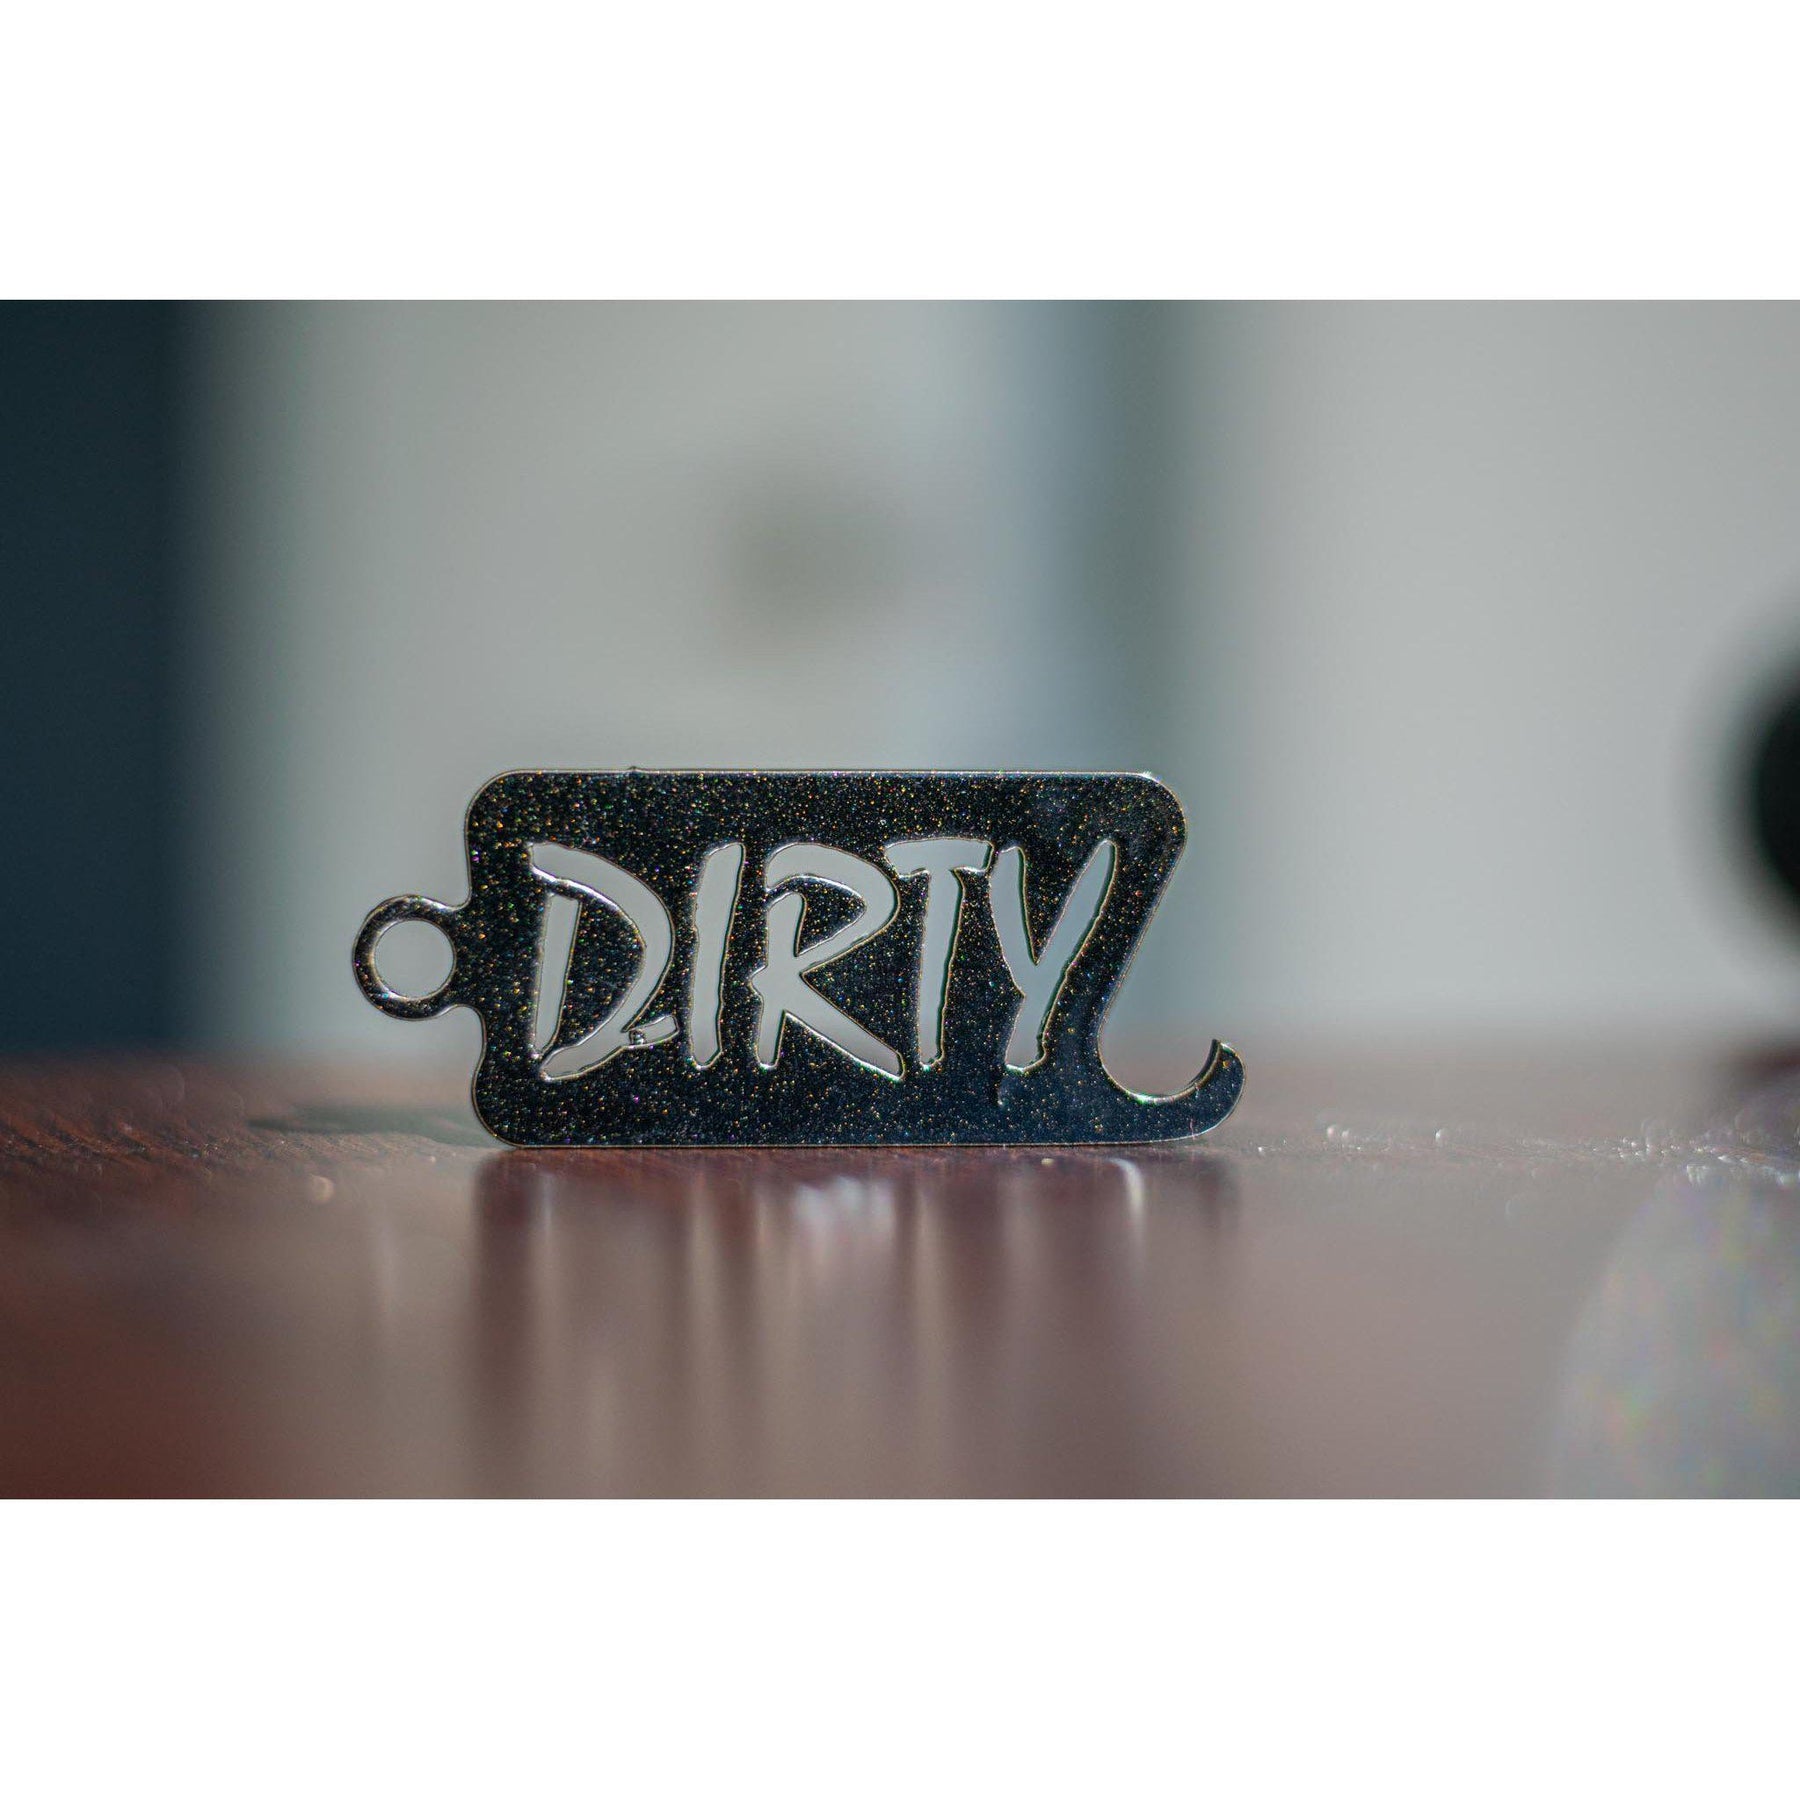 Dirty Diesel Keychain Bottle Opener-Keychain-Dirty Diesel Customs-Dirty Diesel Customs